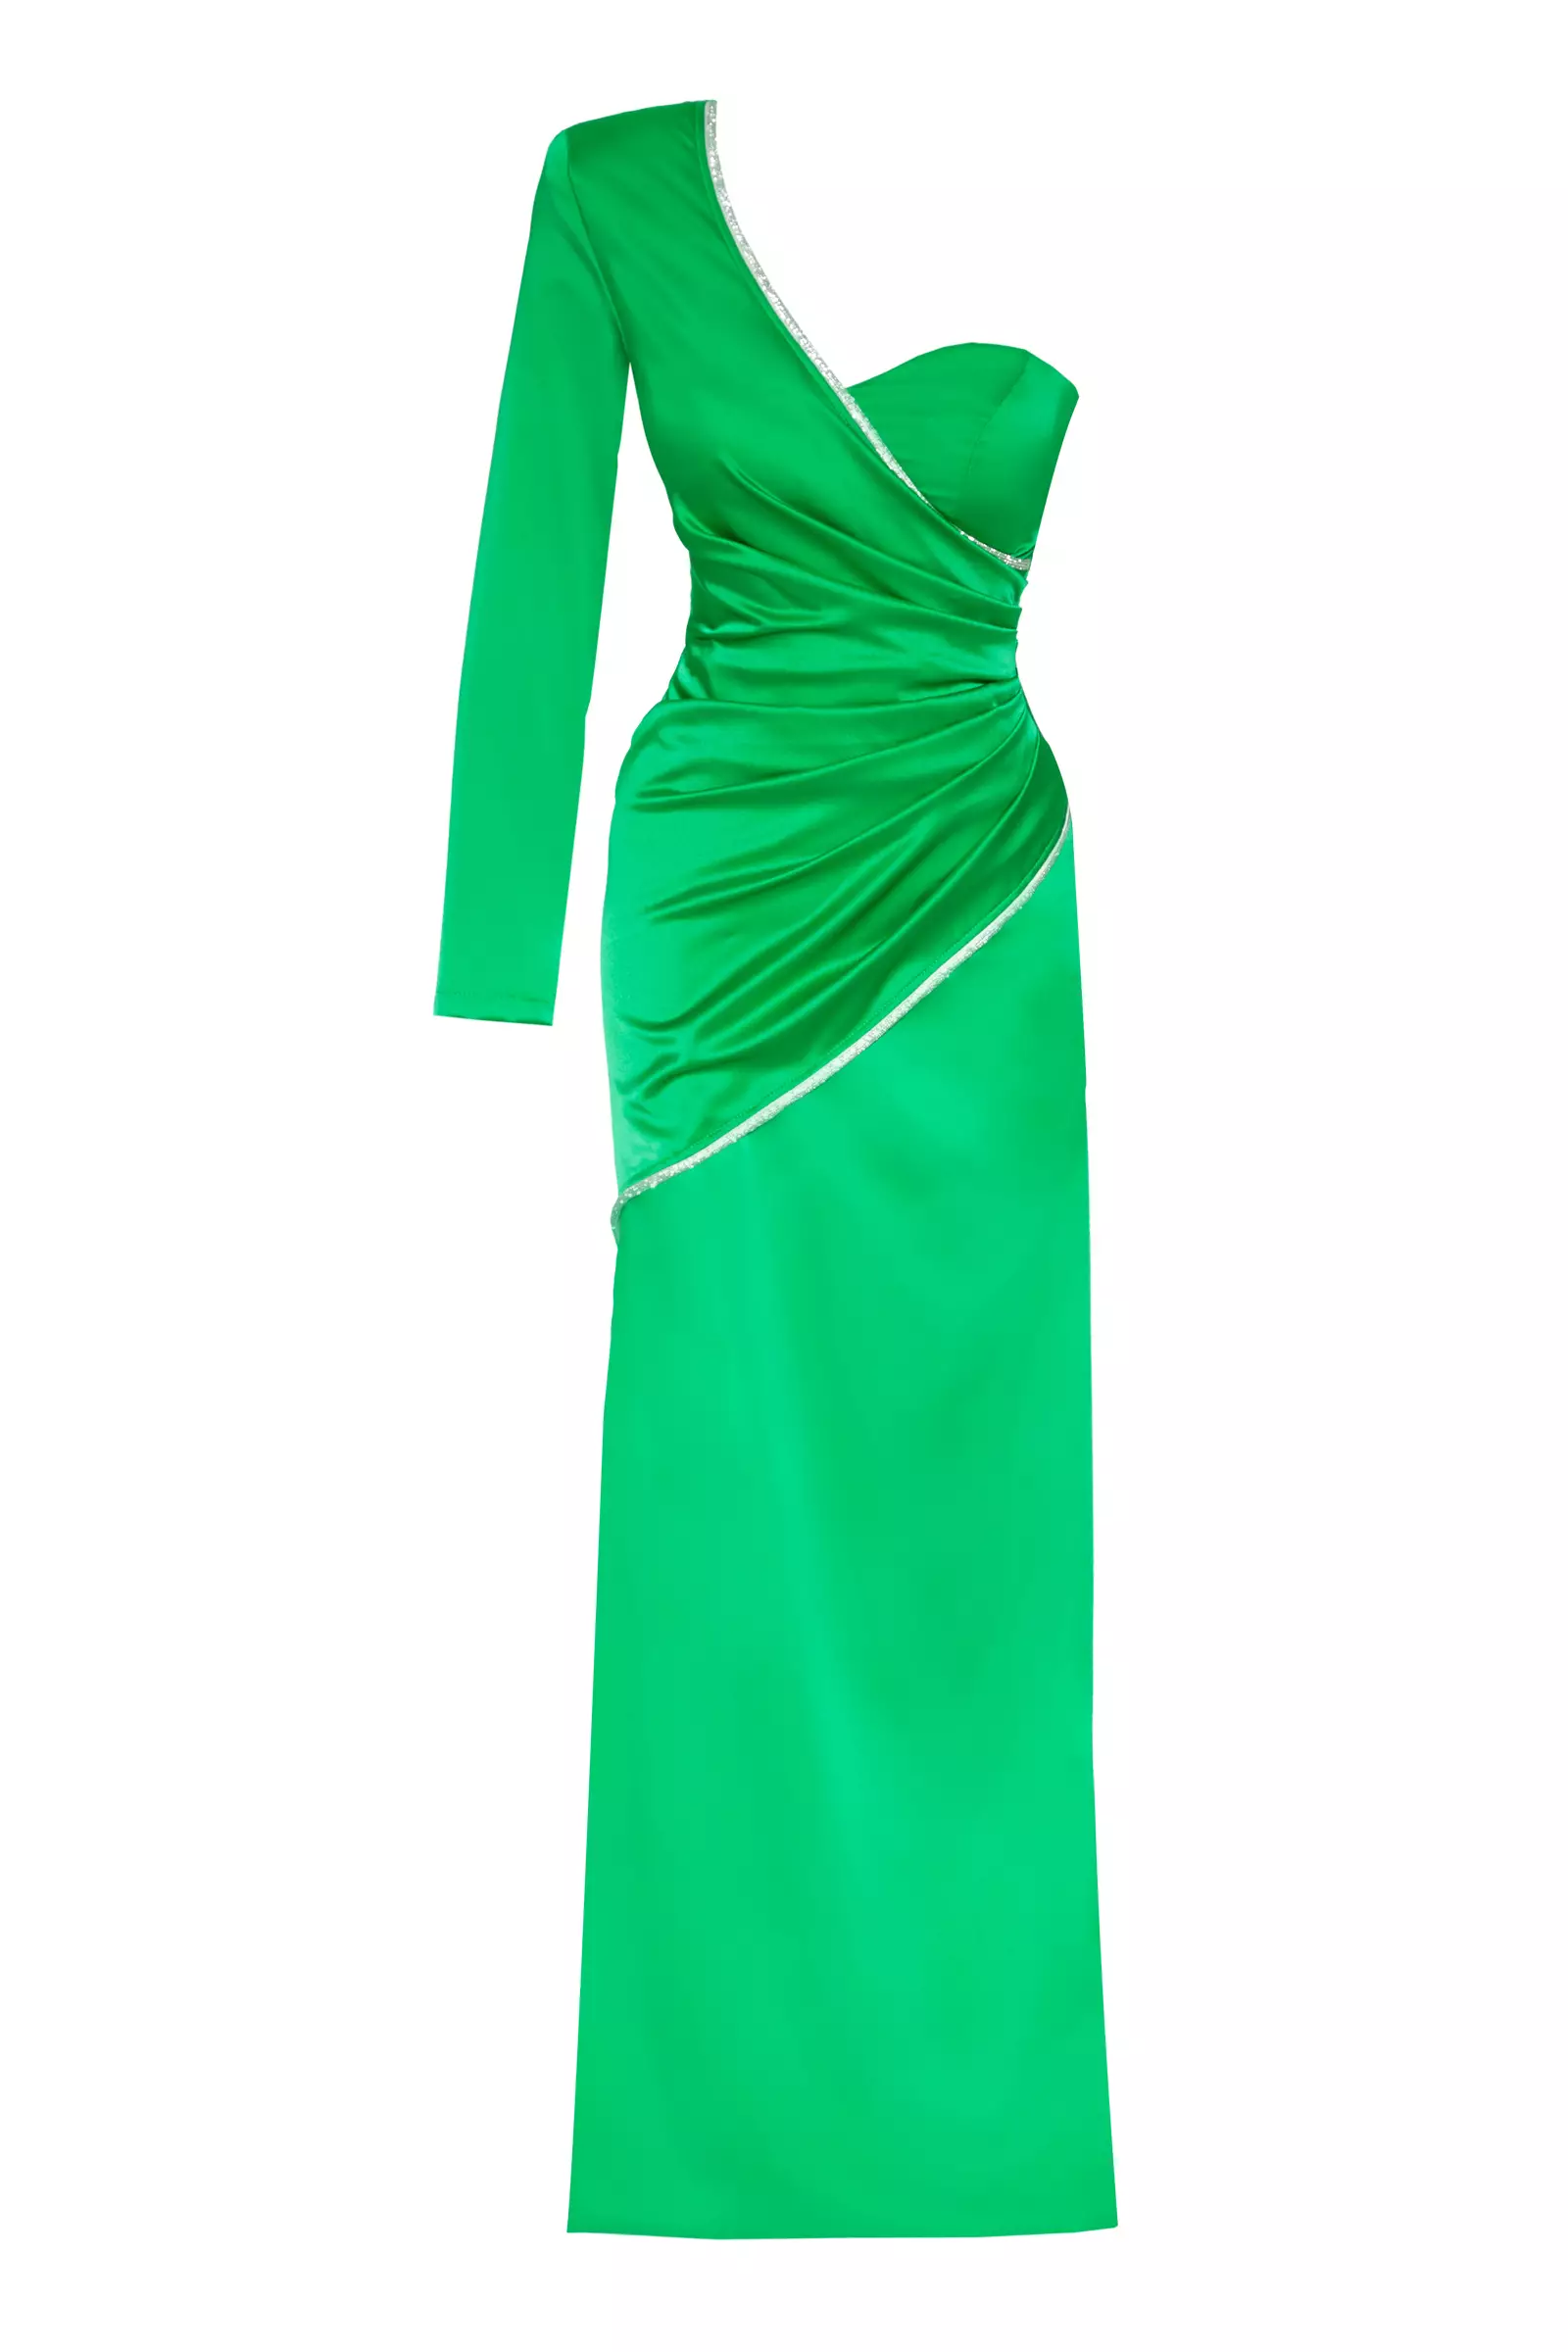 Green satin one arm long dress